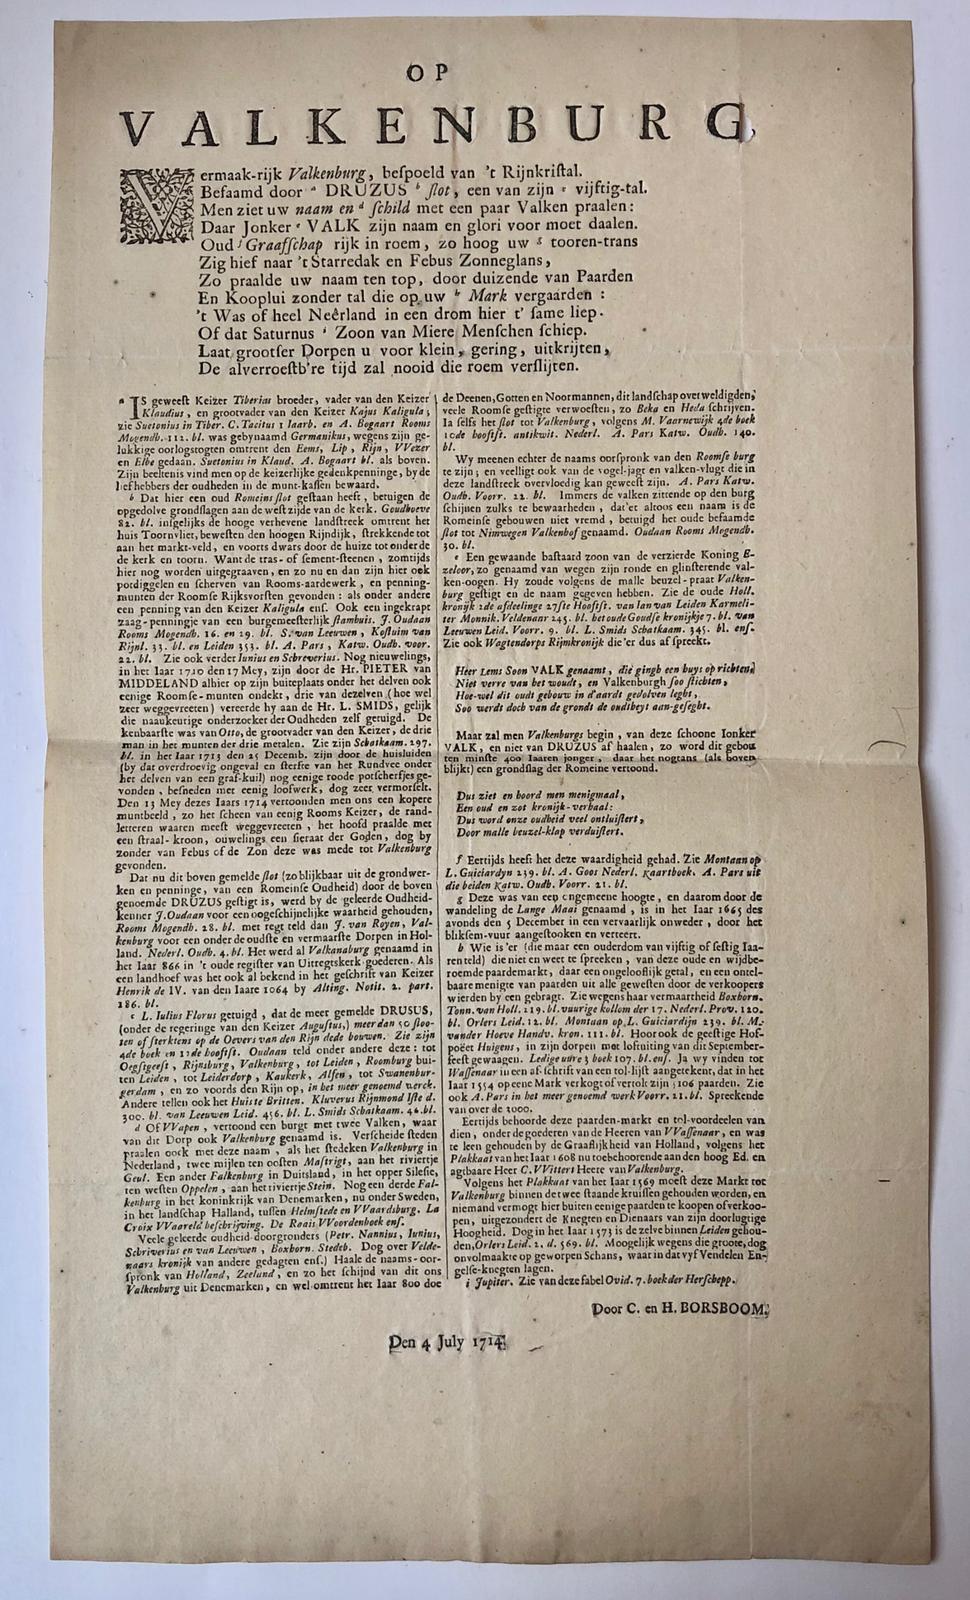  - [PRINTED PUBLICATION, VALKENBURG (Z.-H.), BORSBOOM] Gedrukt blad, getiteld Op Valkenburg, ondertekend 4 july 1714, C. en H. Borsboom. Plano.